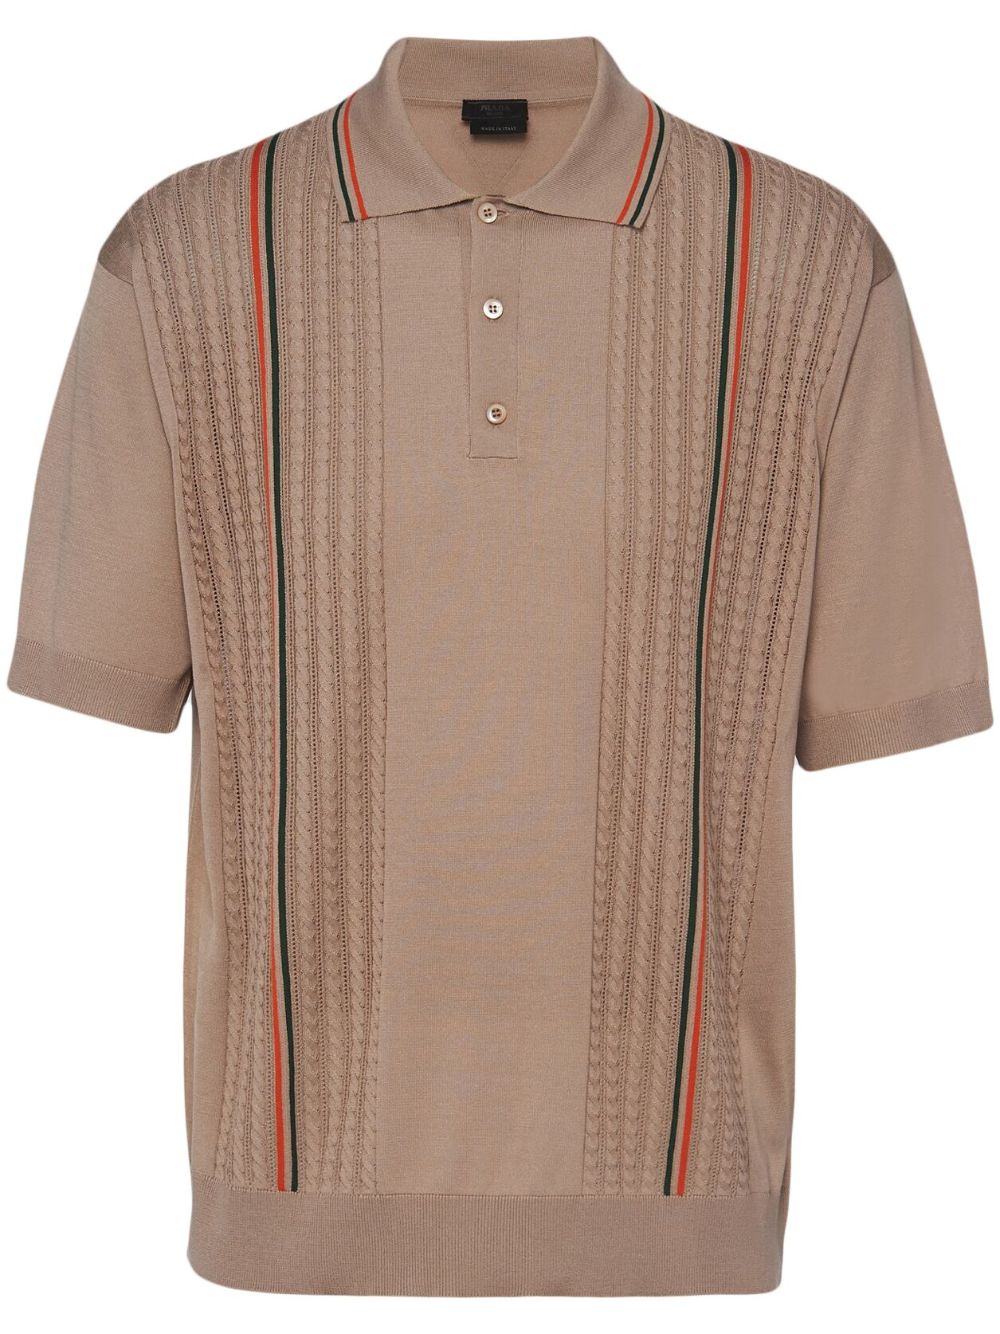 Prada Striped Cotton Bowling Shirt Multi-Colored